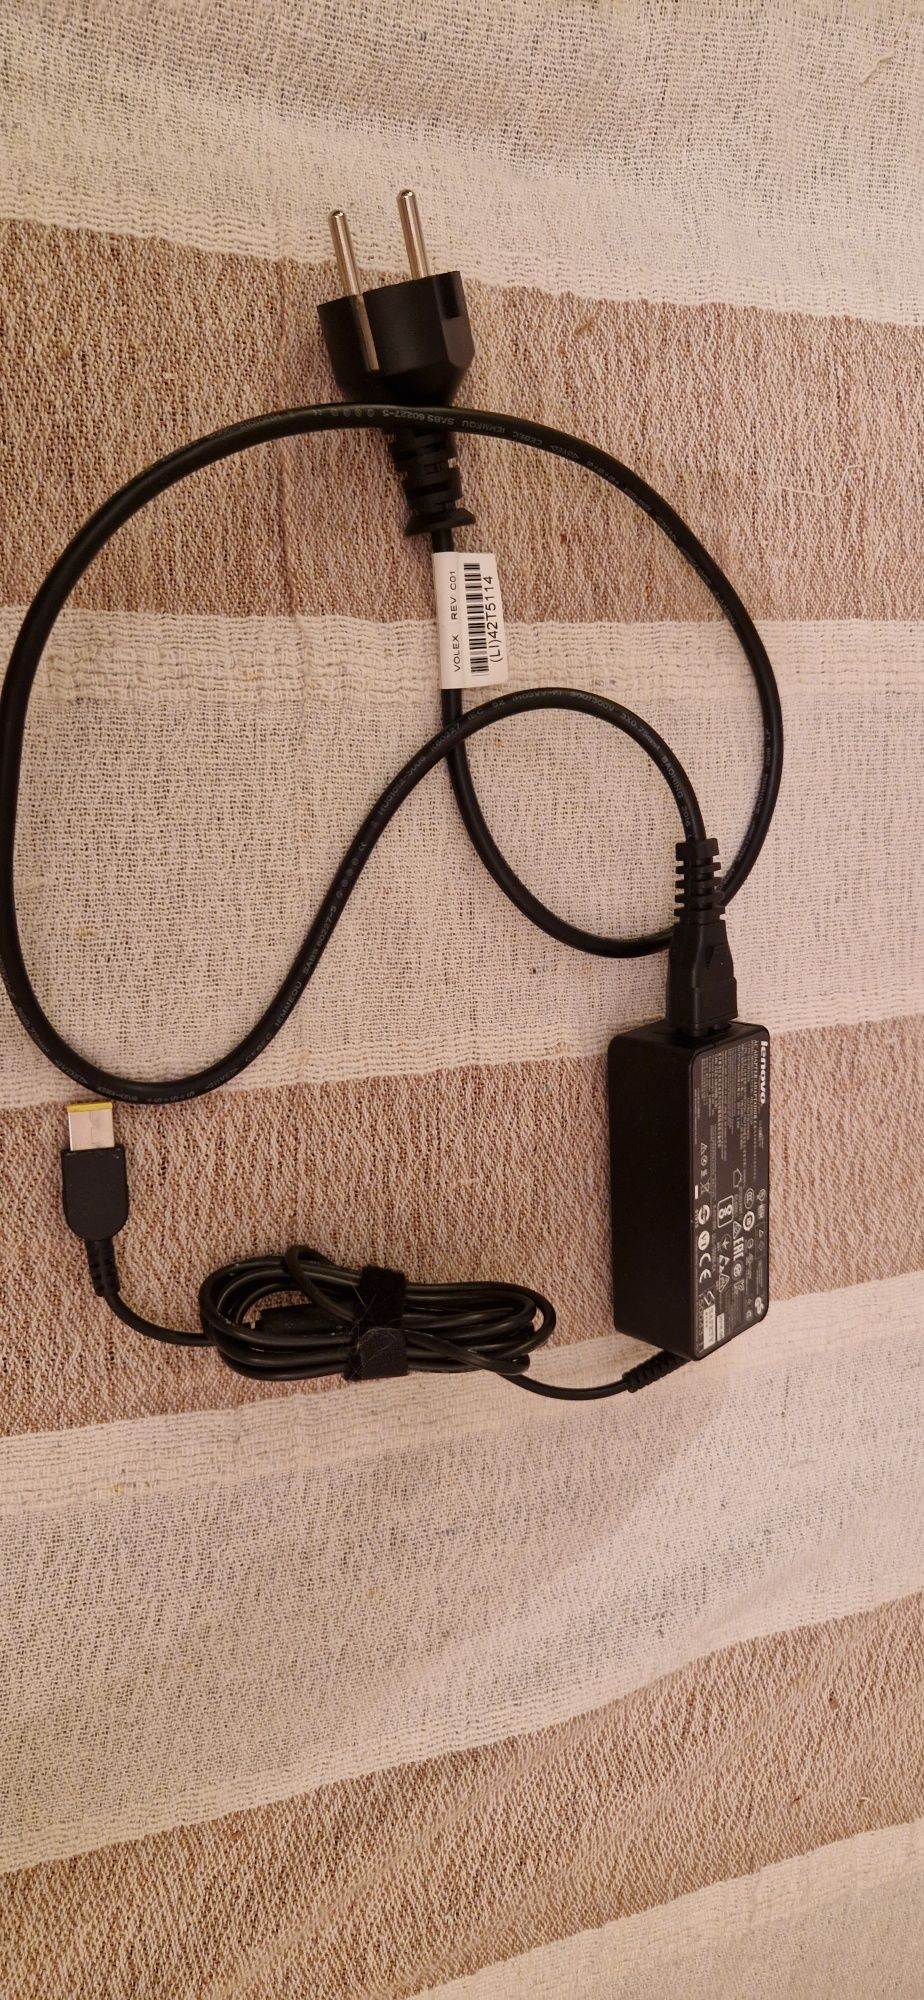 Dock Lenovo DK-1633 

Comecatare USB-C, cablu neinclus
Portur